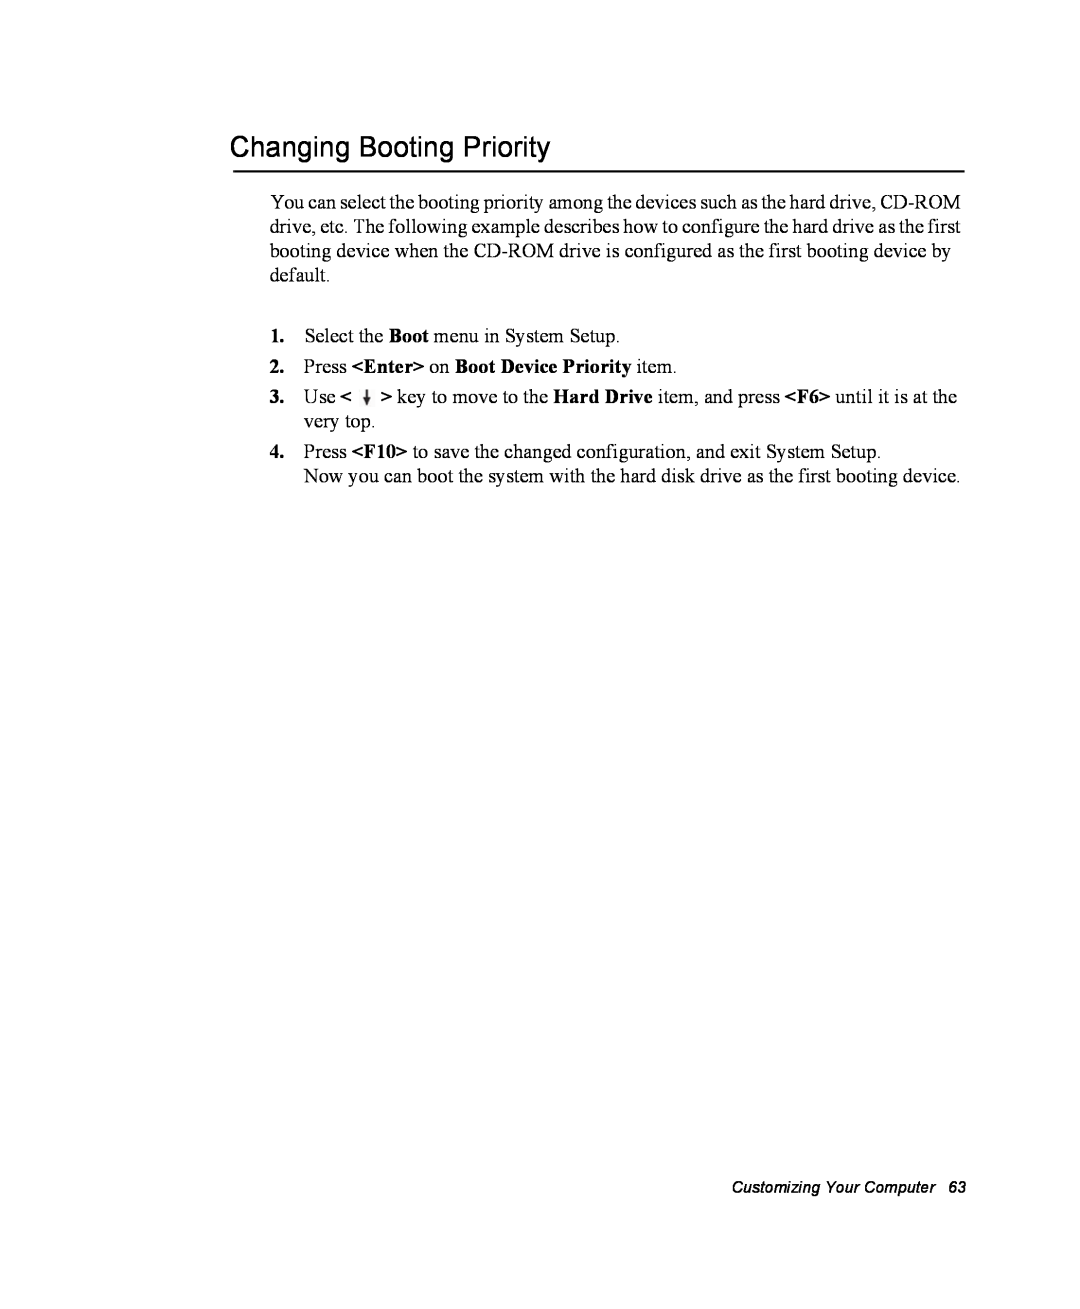 Samsung NM40PRTV03/SEF, NM40PRDV02/SEF, NM40PRCV01/SEF Changing Booting Priority, Press Enter on Boot Device Priority item 